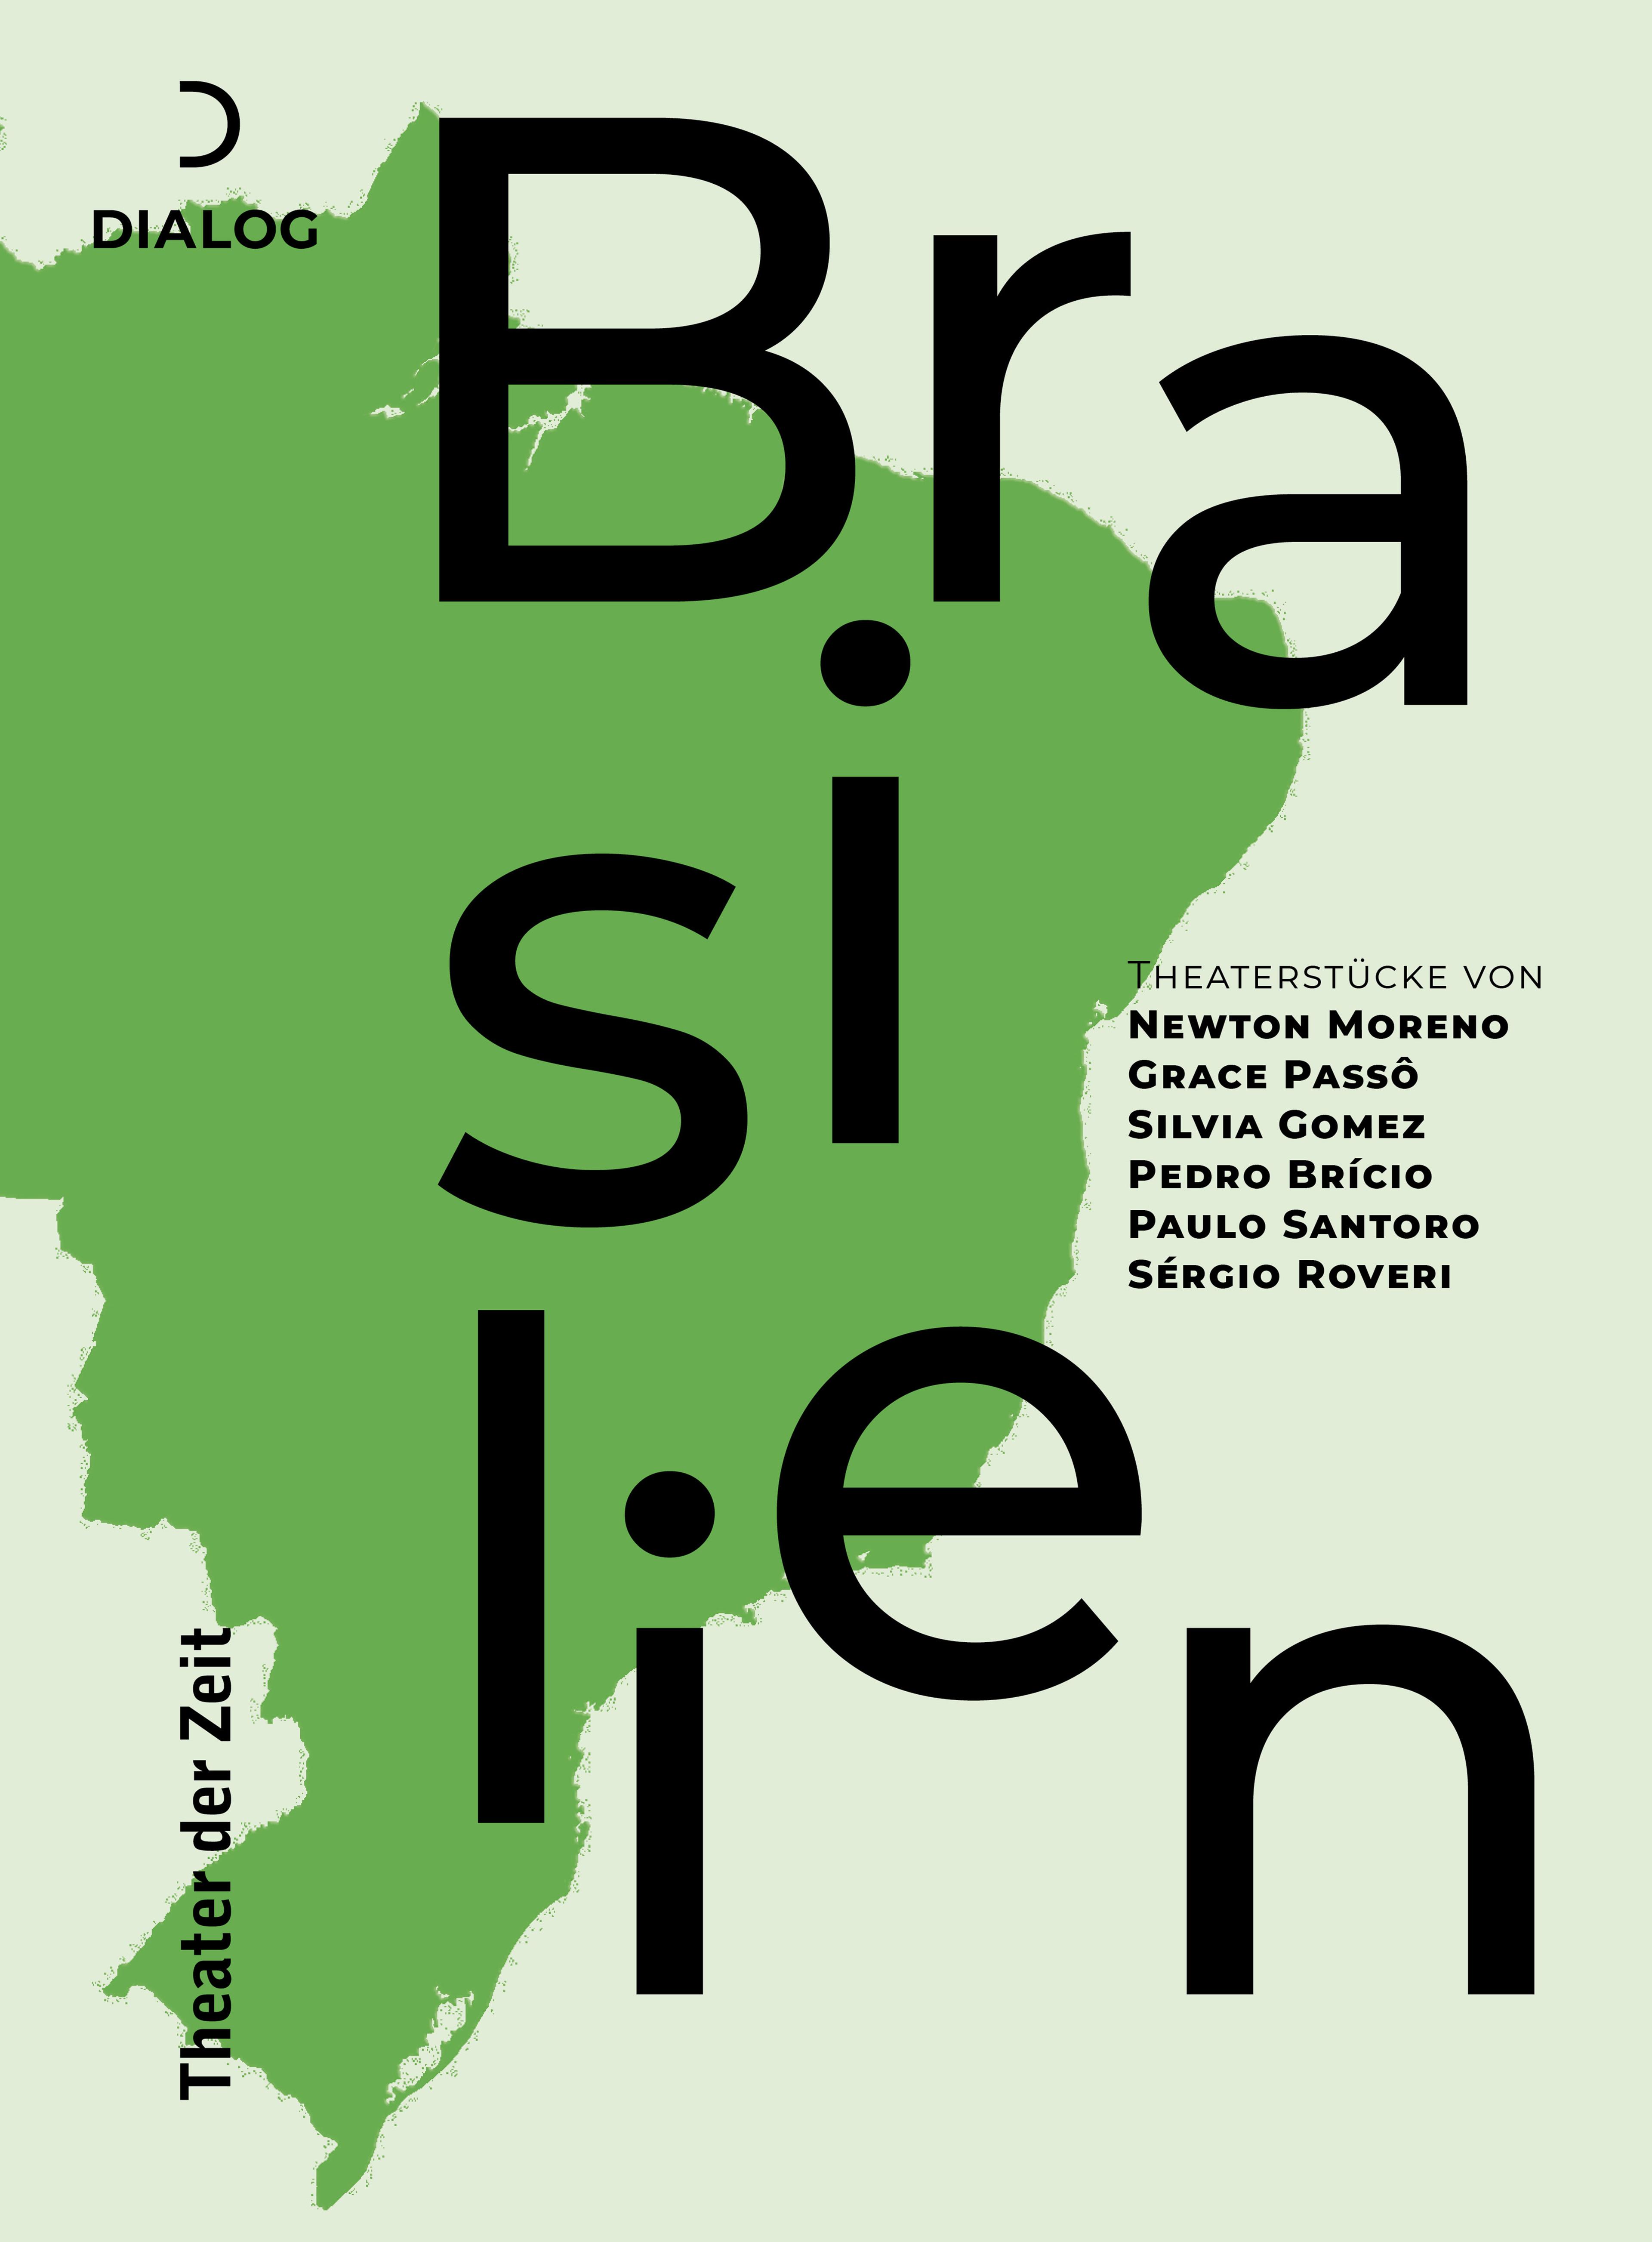 Dialog 28 "Theaterstücke aus Brasilien"